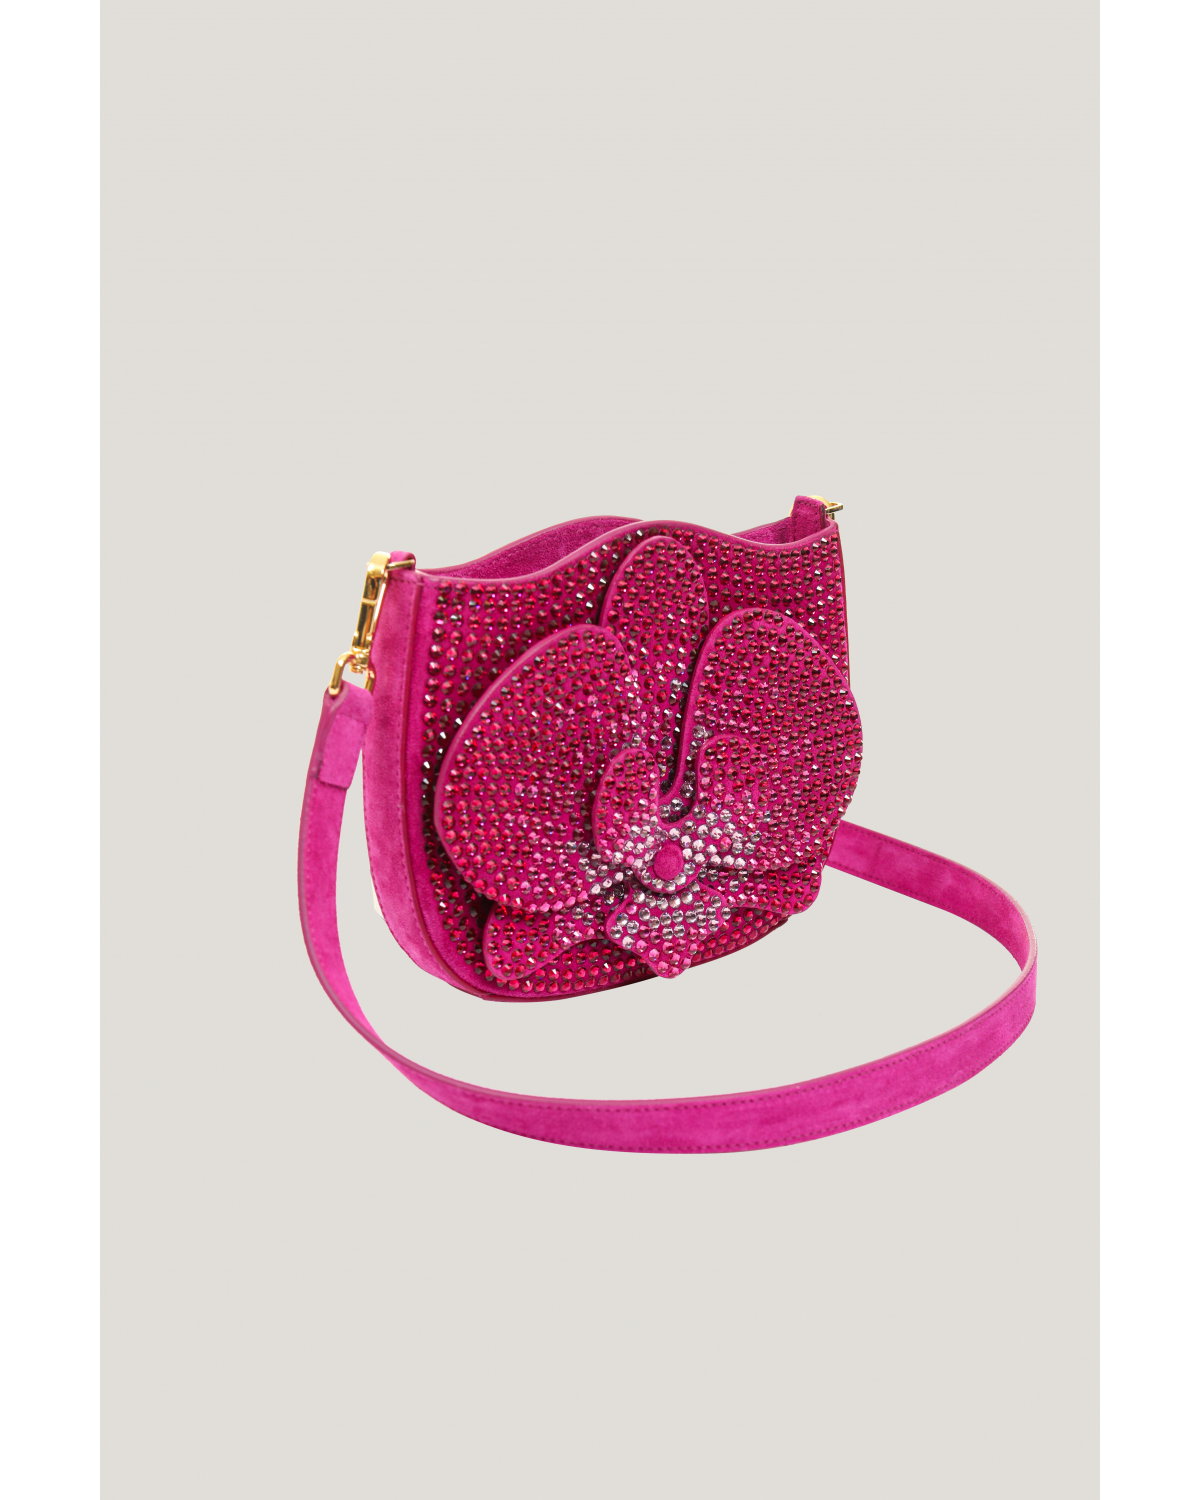 ELABEST Glitter Evening Clutch Bag Rhinestone Handbag Crossbody Purse  Wedding Party Bag for Women and Girls (Double sided pink crystal): Handbags:  Amazon.com